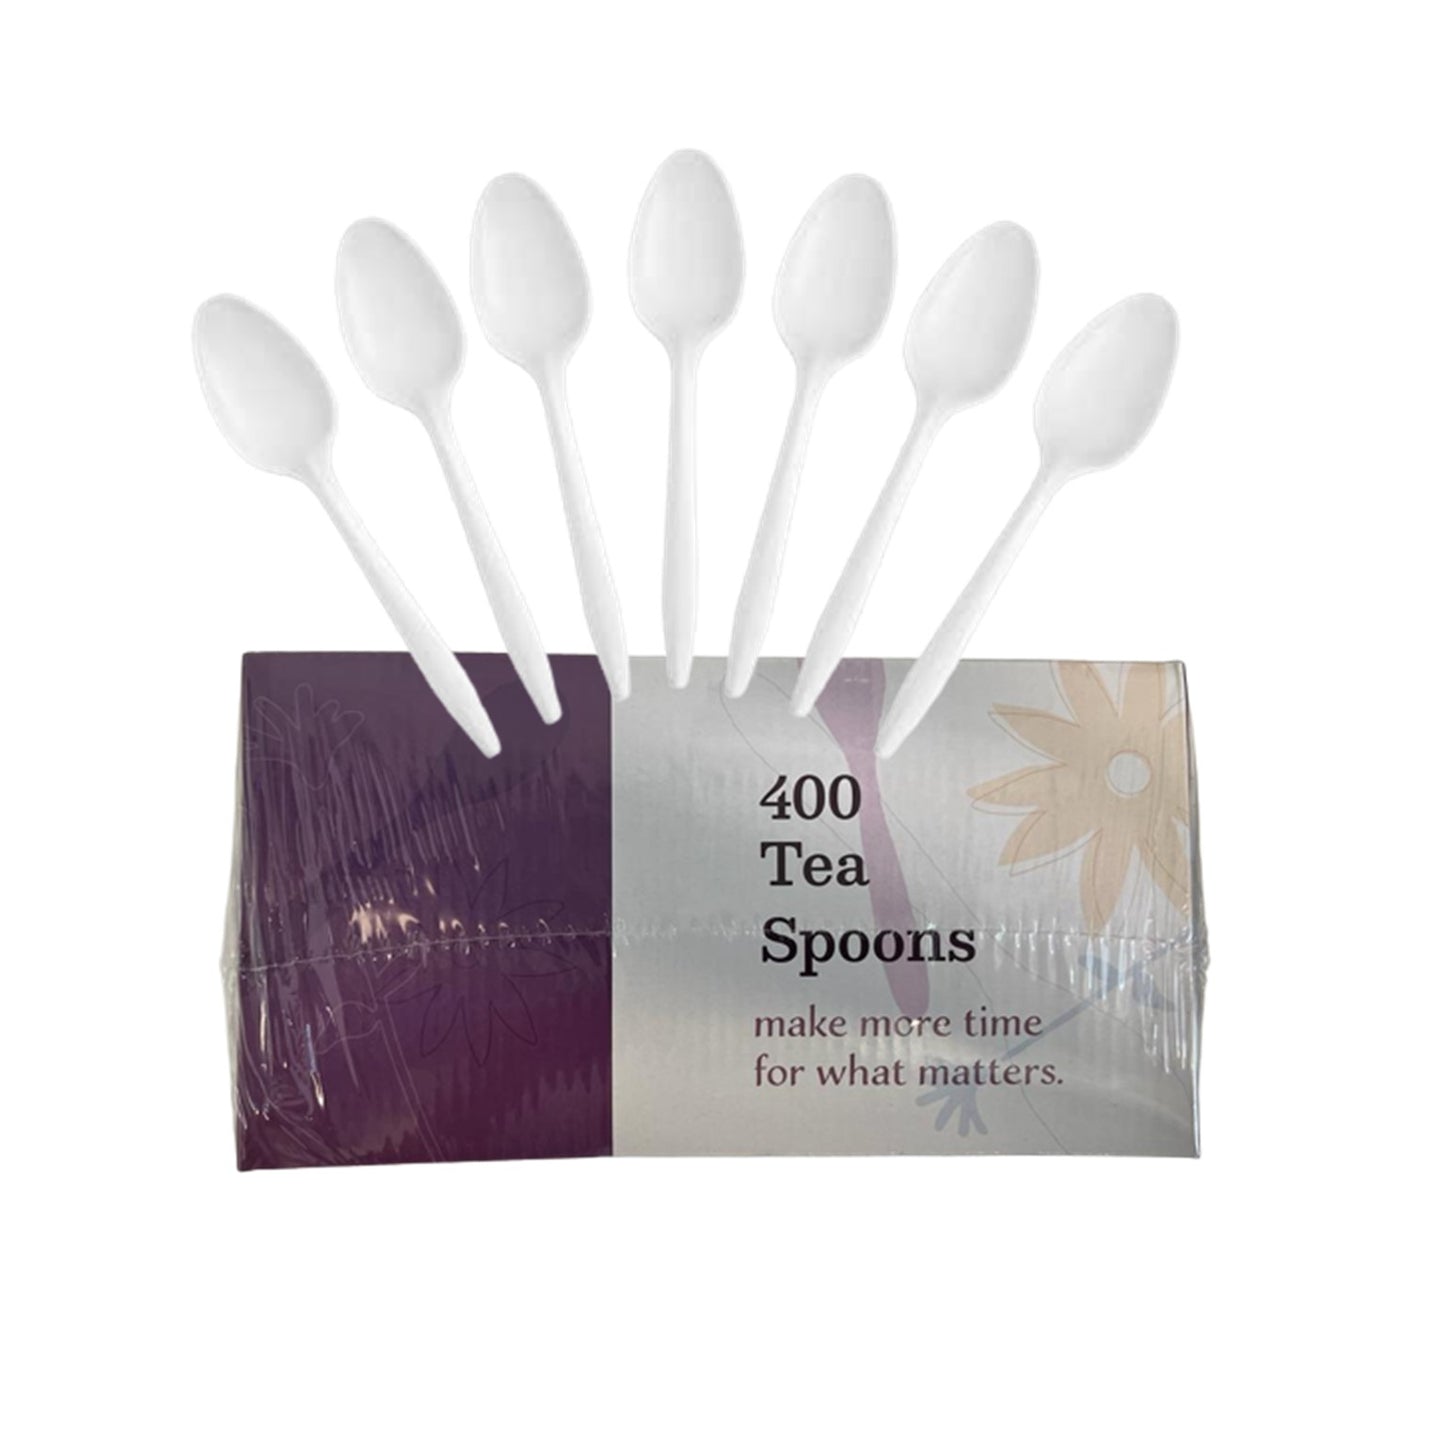 "BULK" Plastic Cutlery Teaspoons Medium Weight Disposable White Cutlery Nicole Collection   